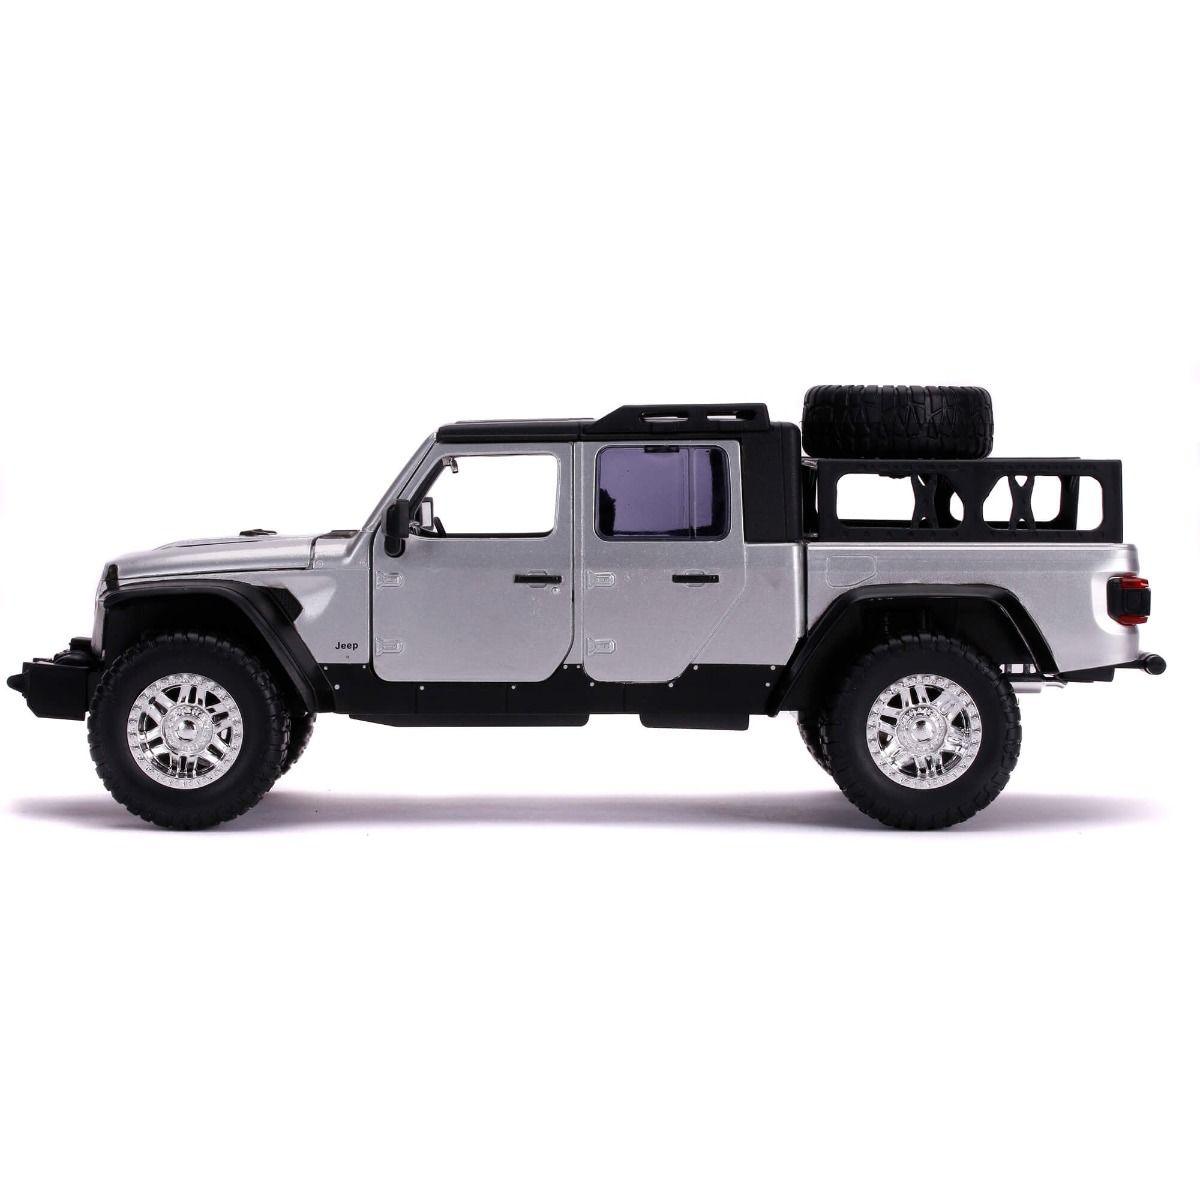 JAD31984 Fast and Furious 9: The Fast Saga - Jeep Gladiator 1:24 Scale Hollywood Ride - Jada Toys - Titan Pop Culture